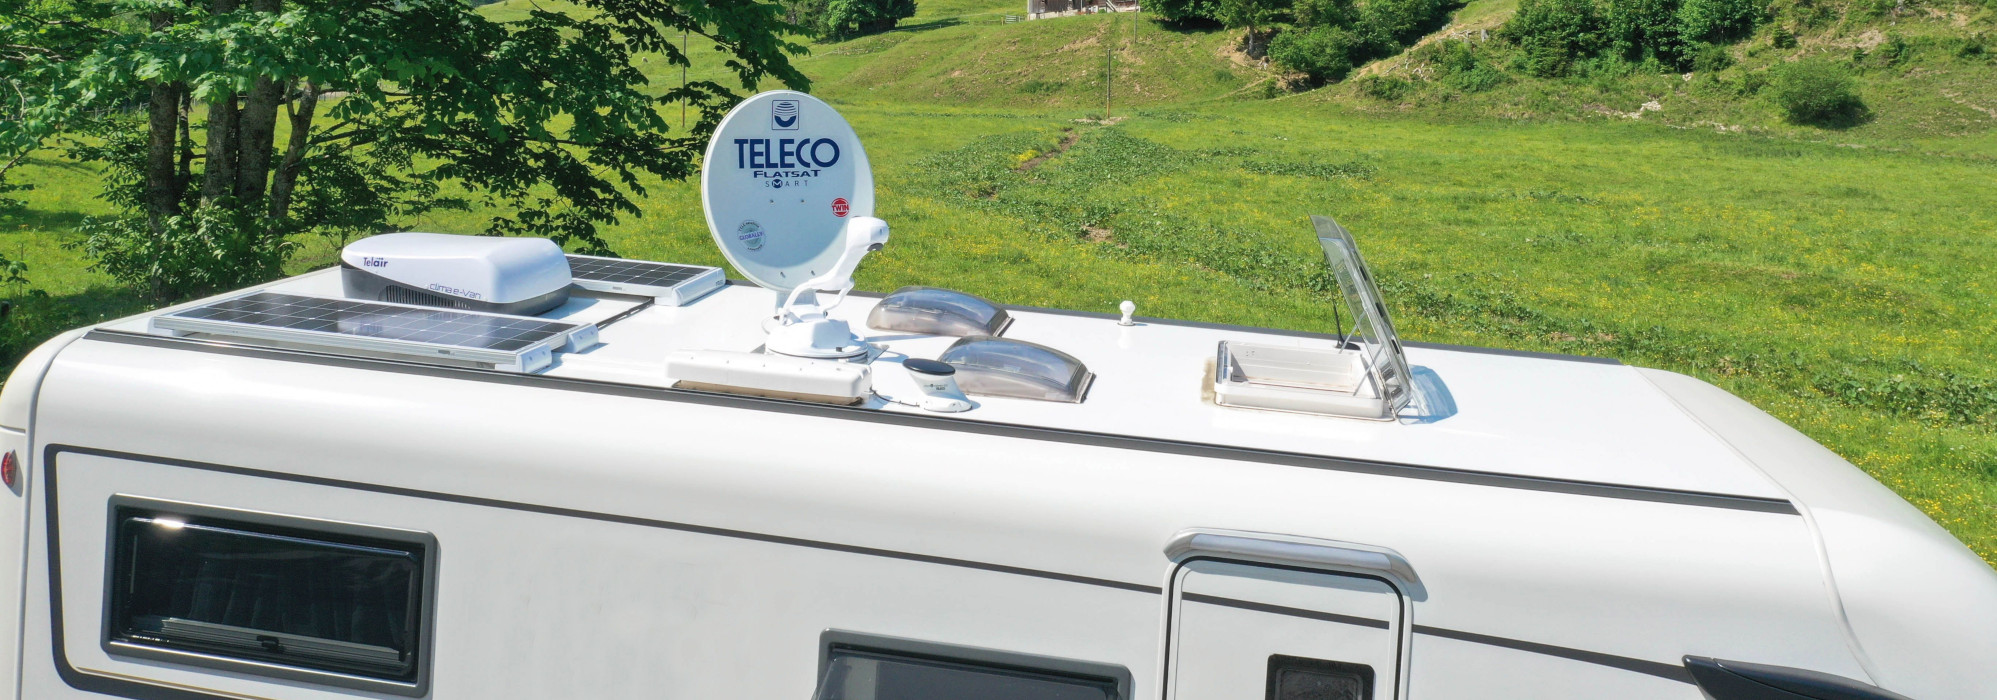 Teleco presents a new 130W rigid photovoltaic module